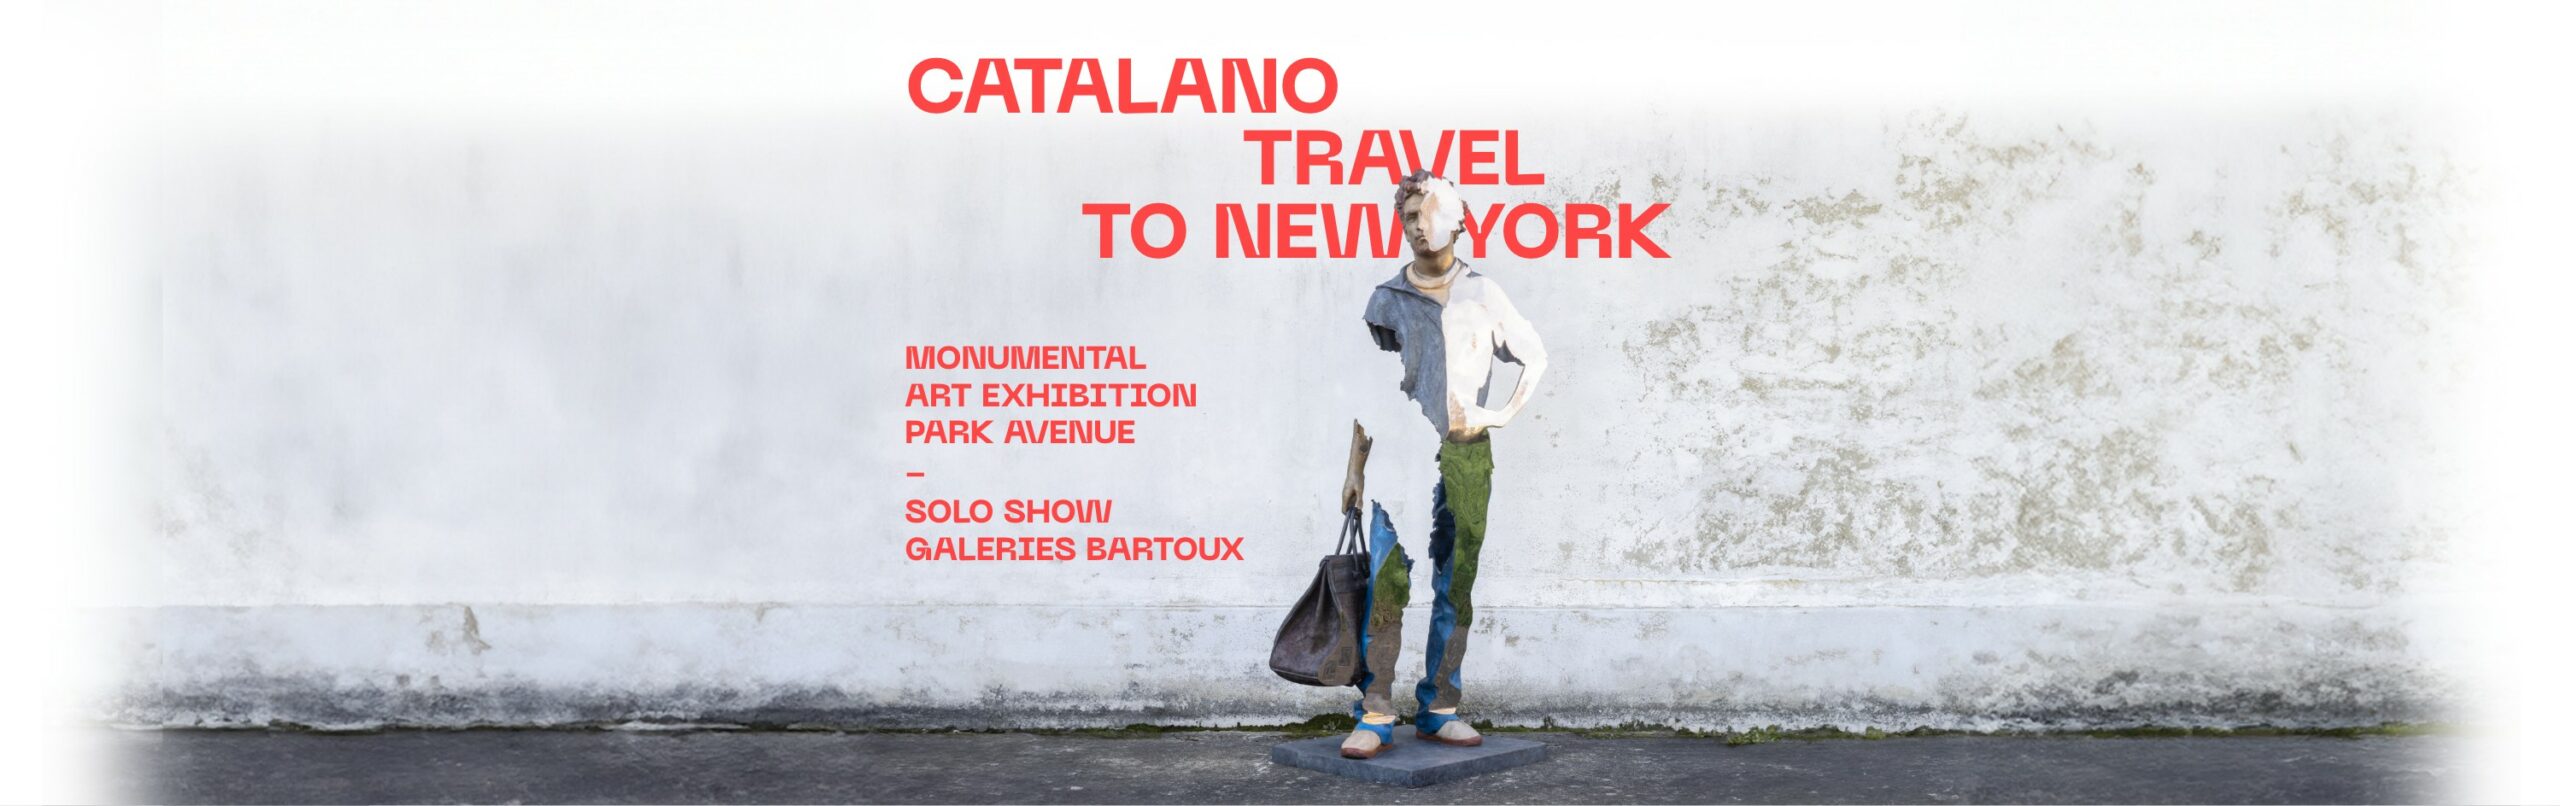 BRUNO CATALANO TRAVEL TO NEW YORK - Galeries Bartoux